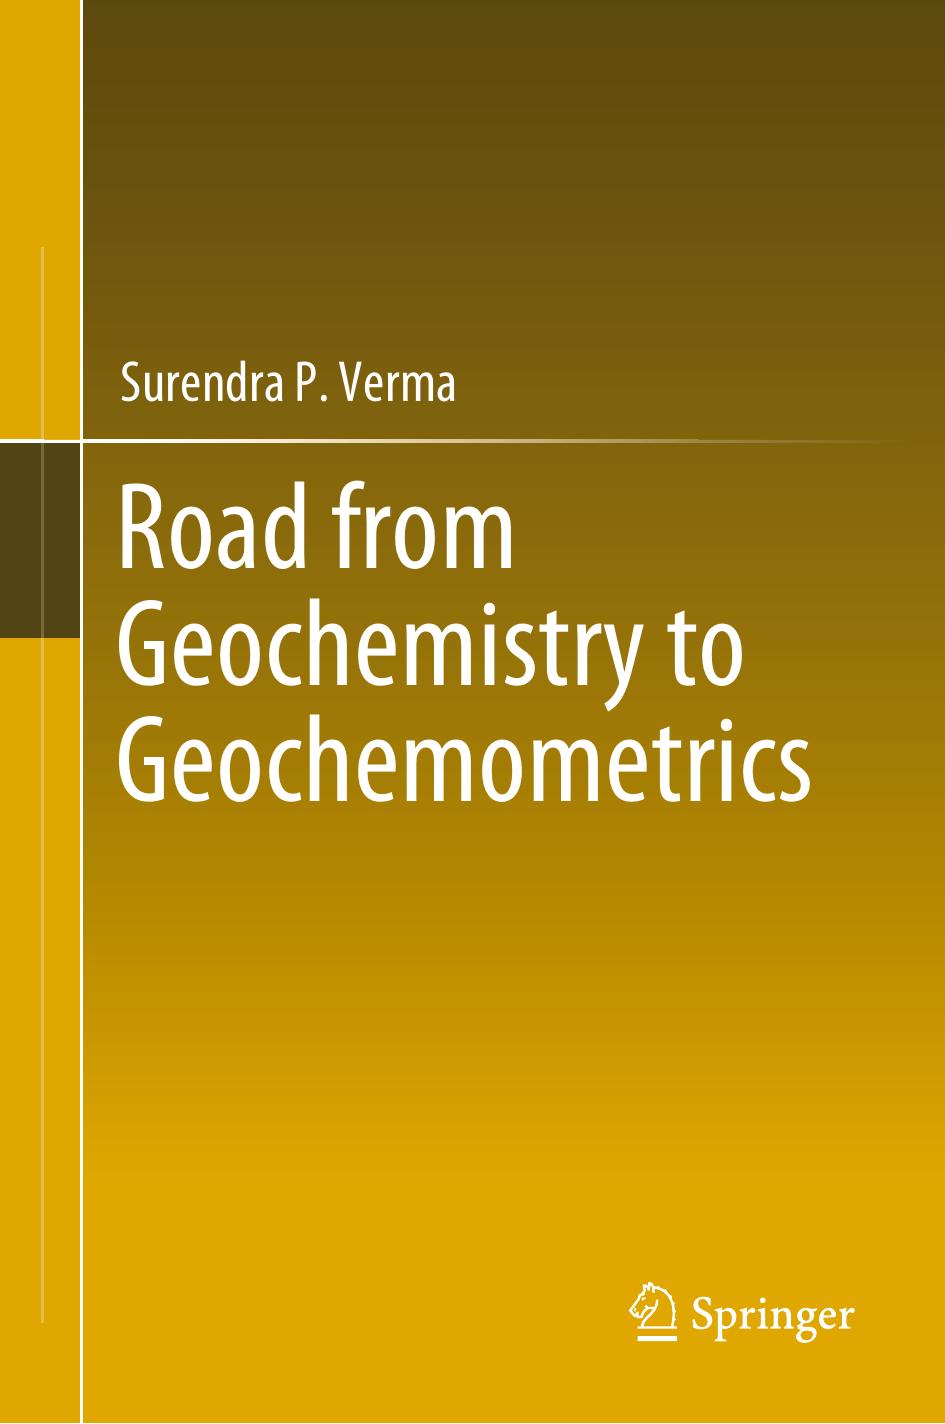 Road from Geochemistry to Geochemometrics by Surendra P. Verma